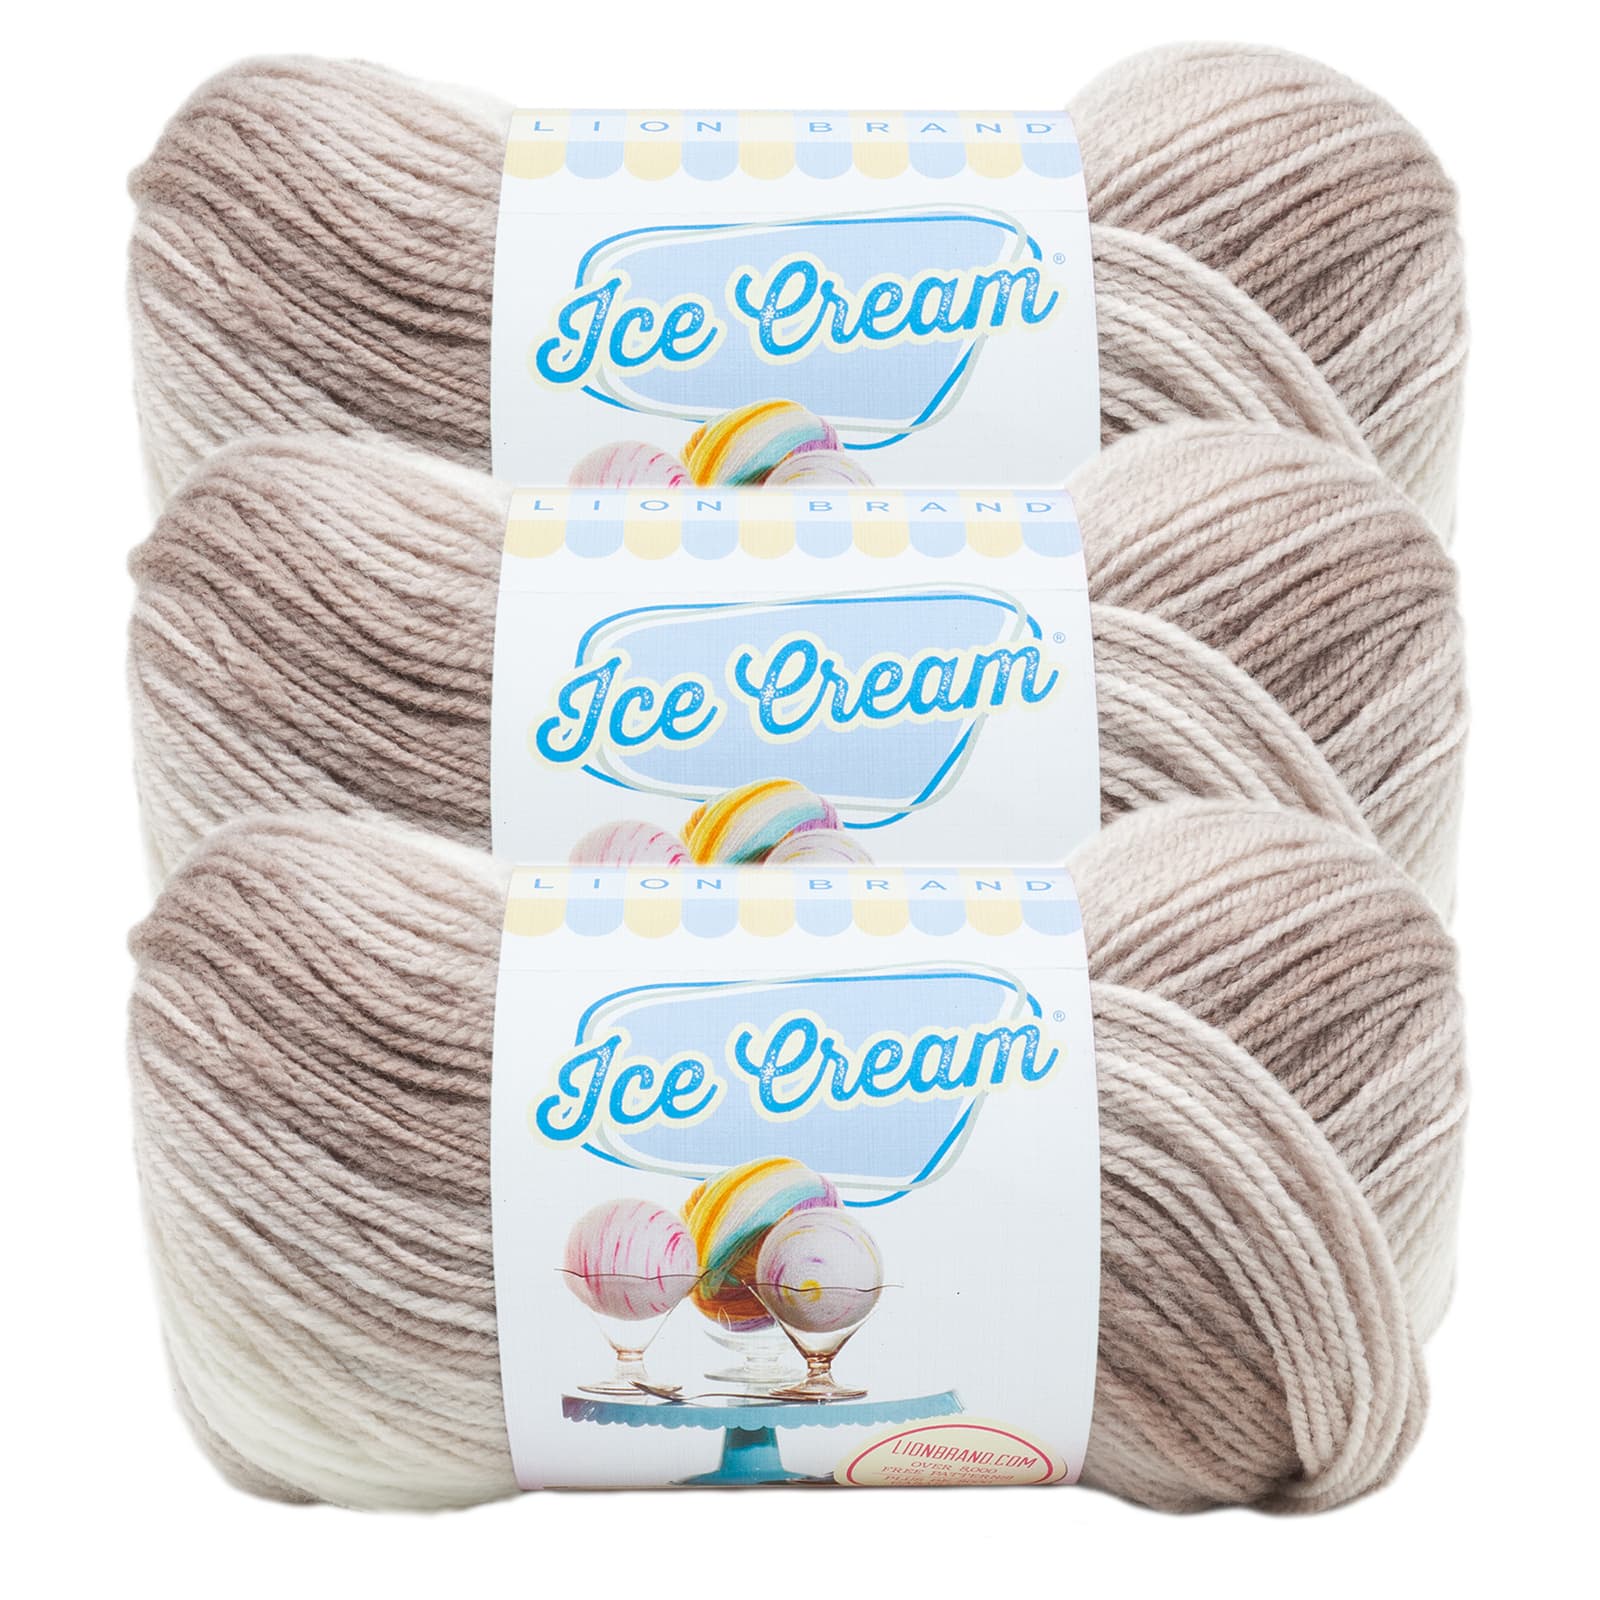 Lion Brand Ice Cream Yarn - Cotton Candy - Cream Pastel Pink